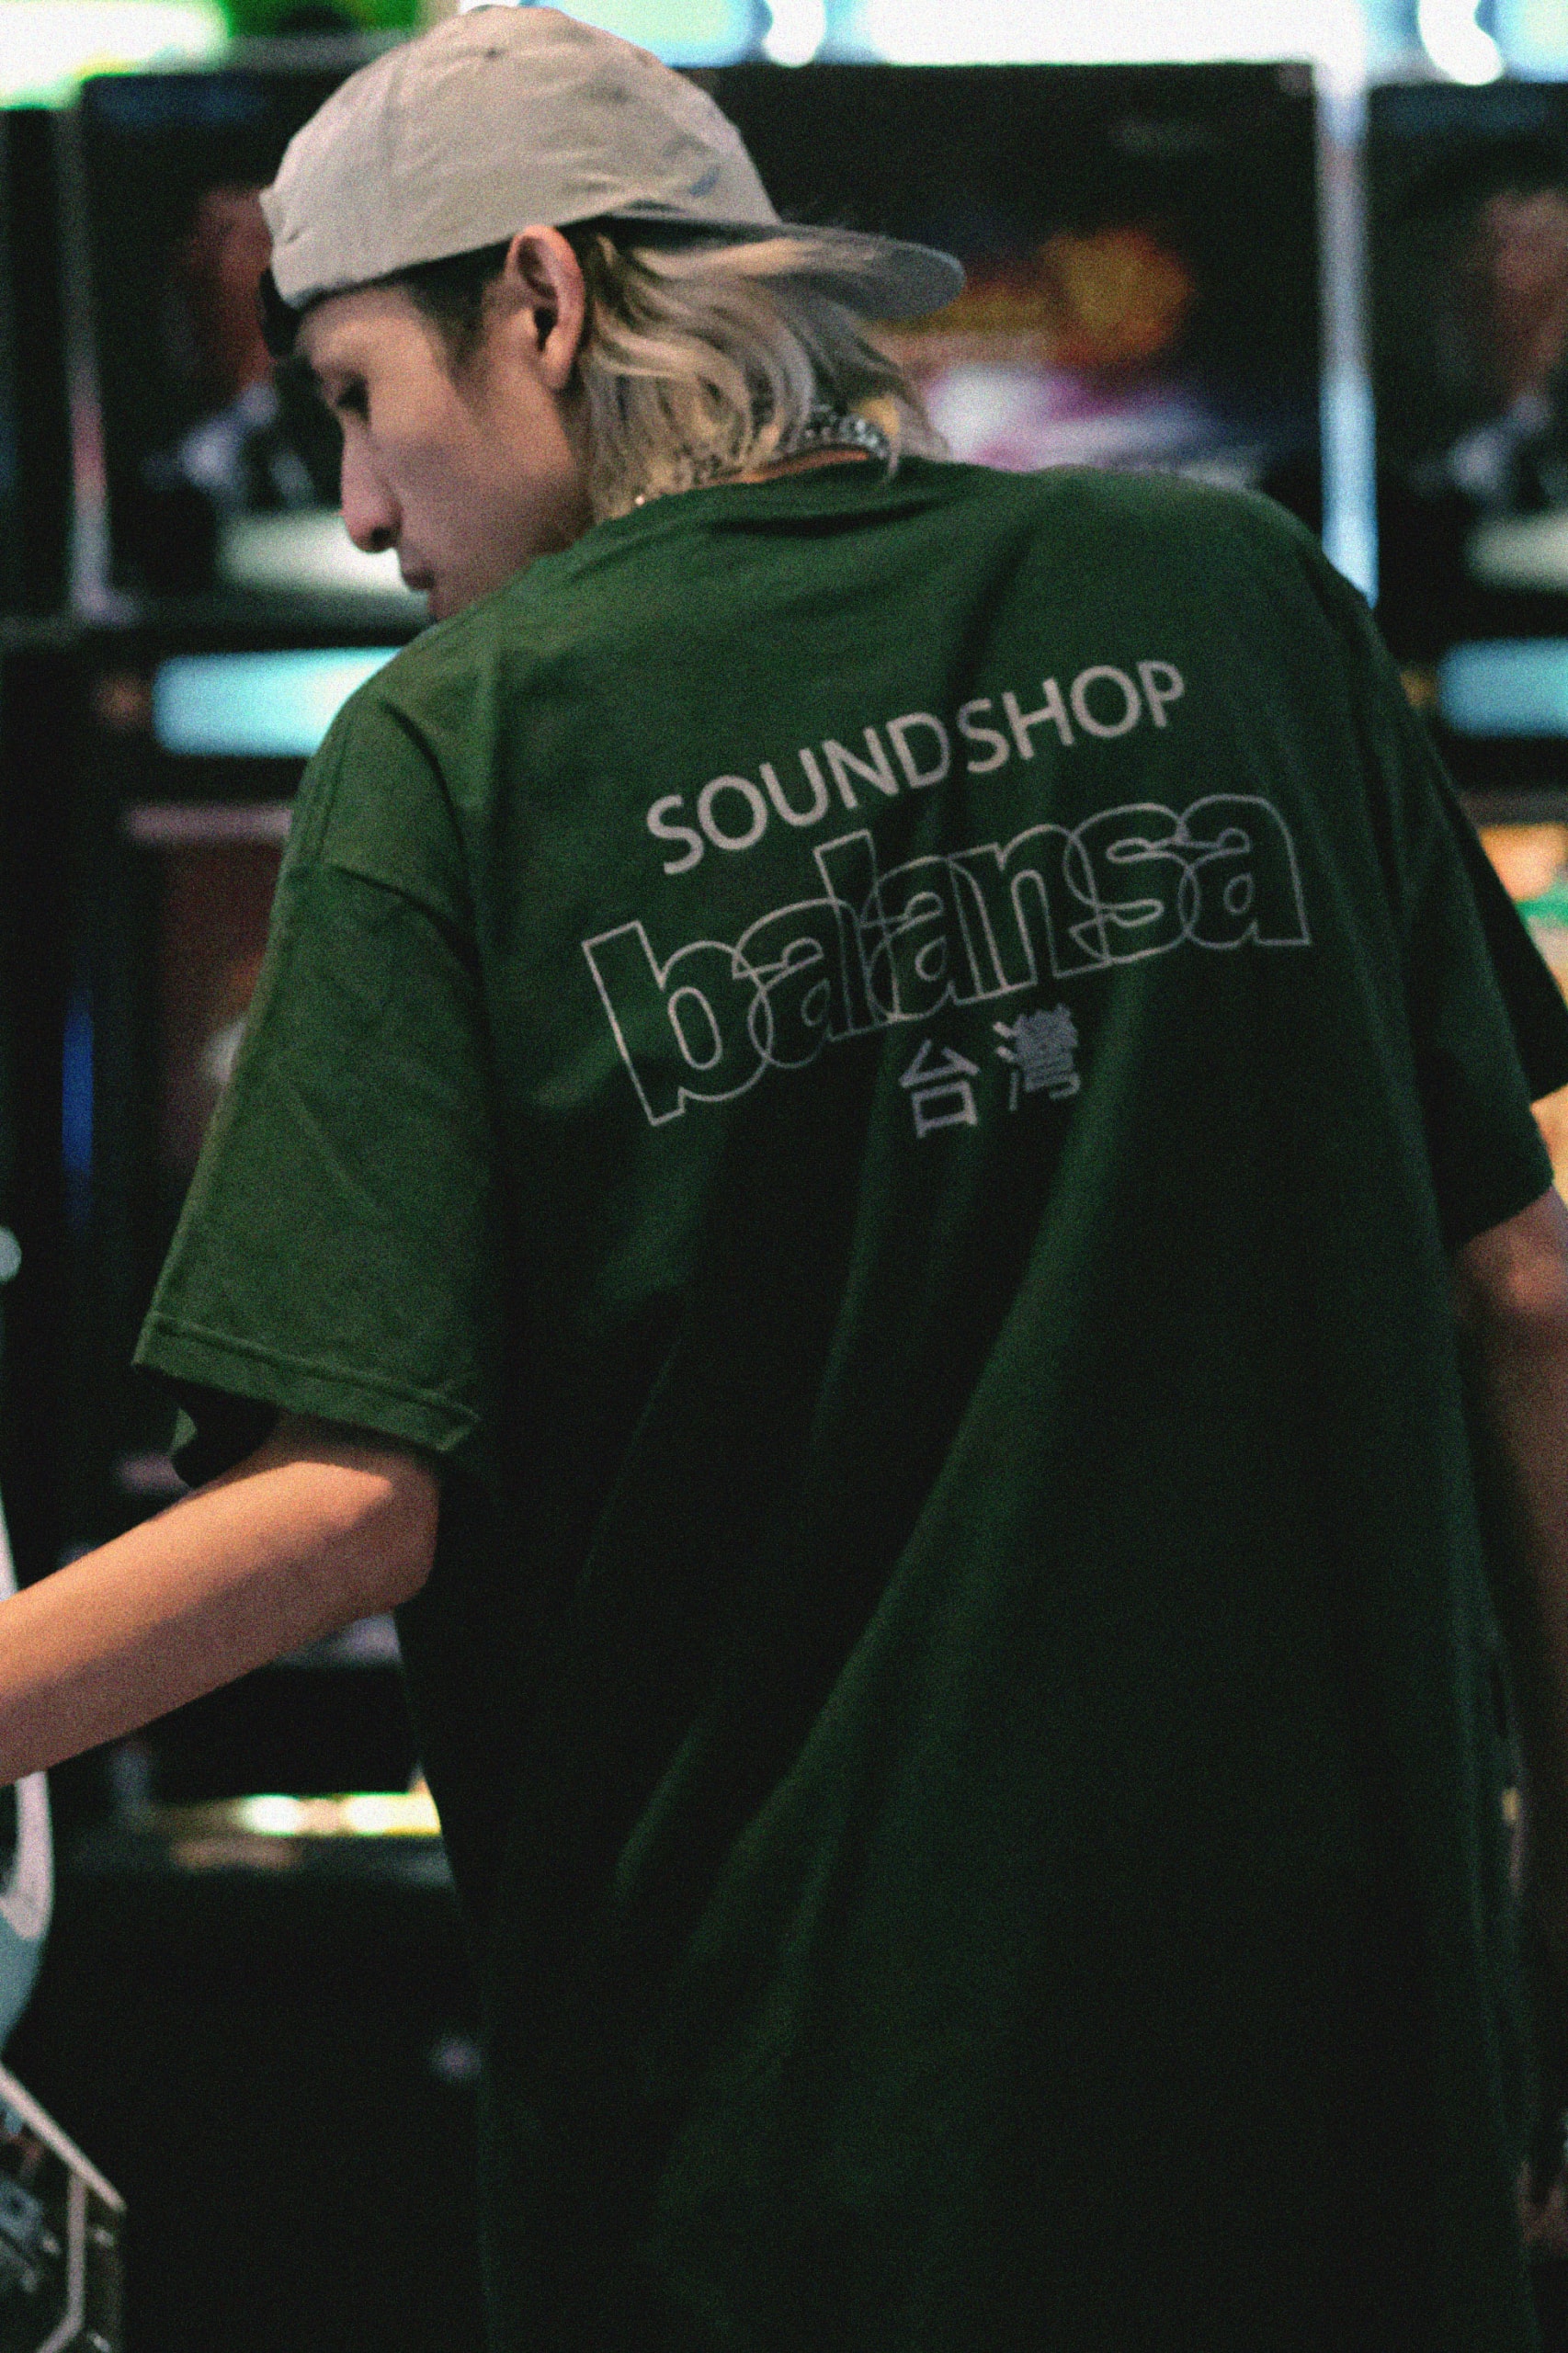 Sound Shop Balansa x Less Taiwan 最新聯乘系列即將登場